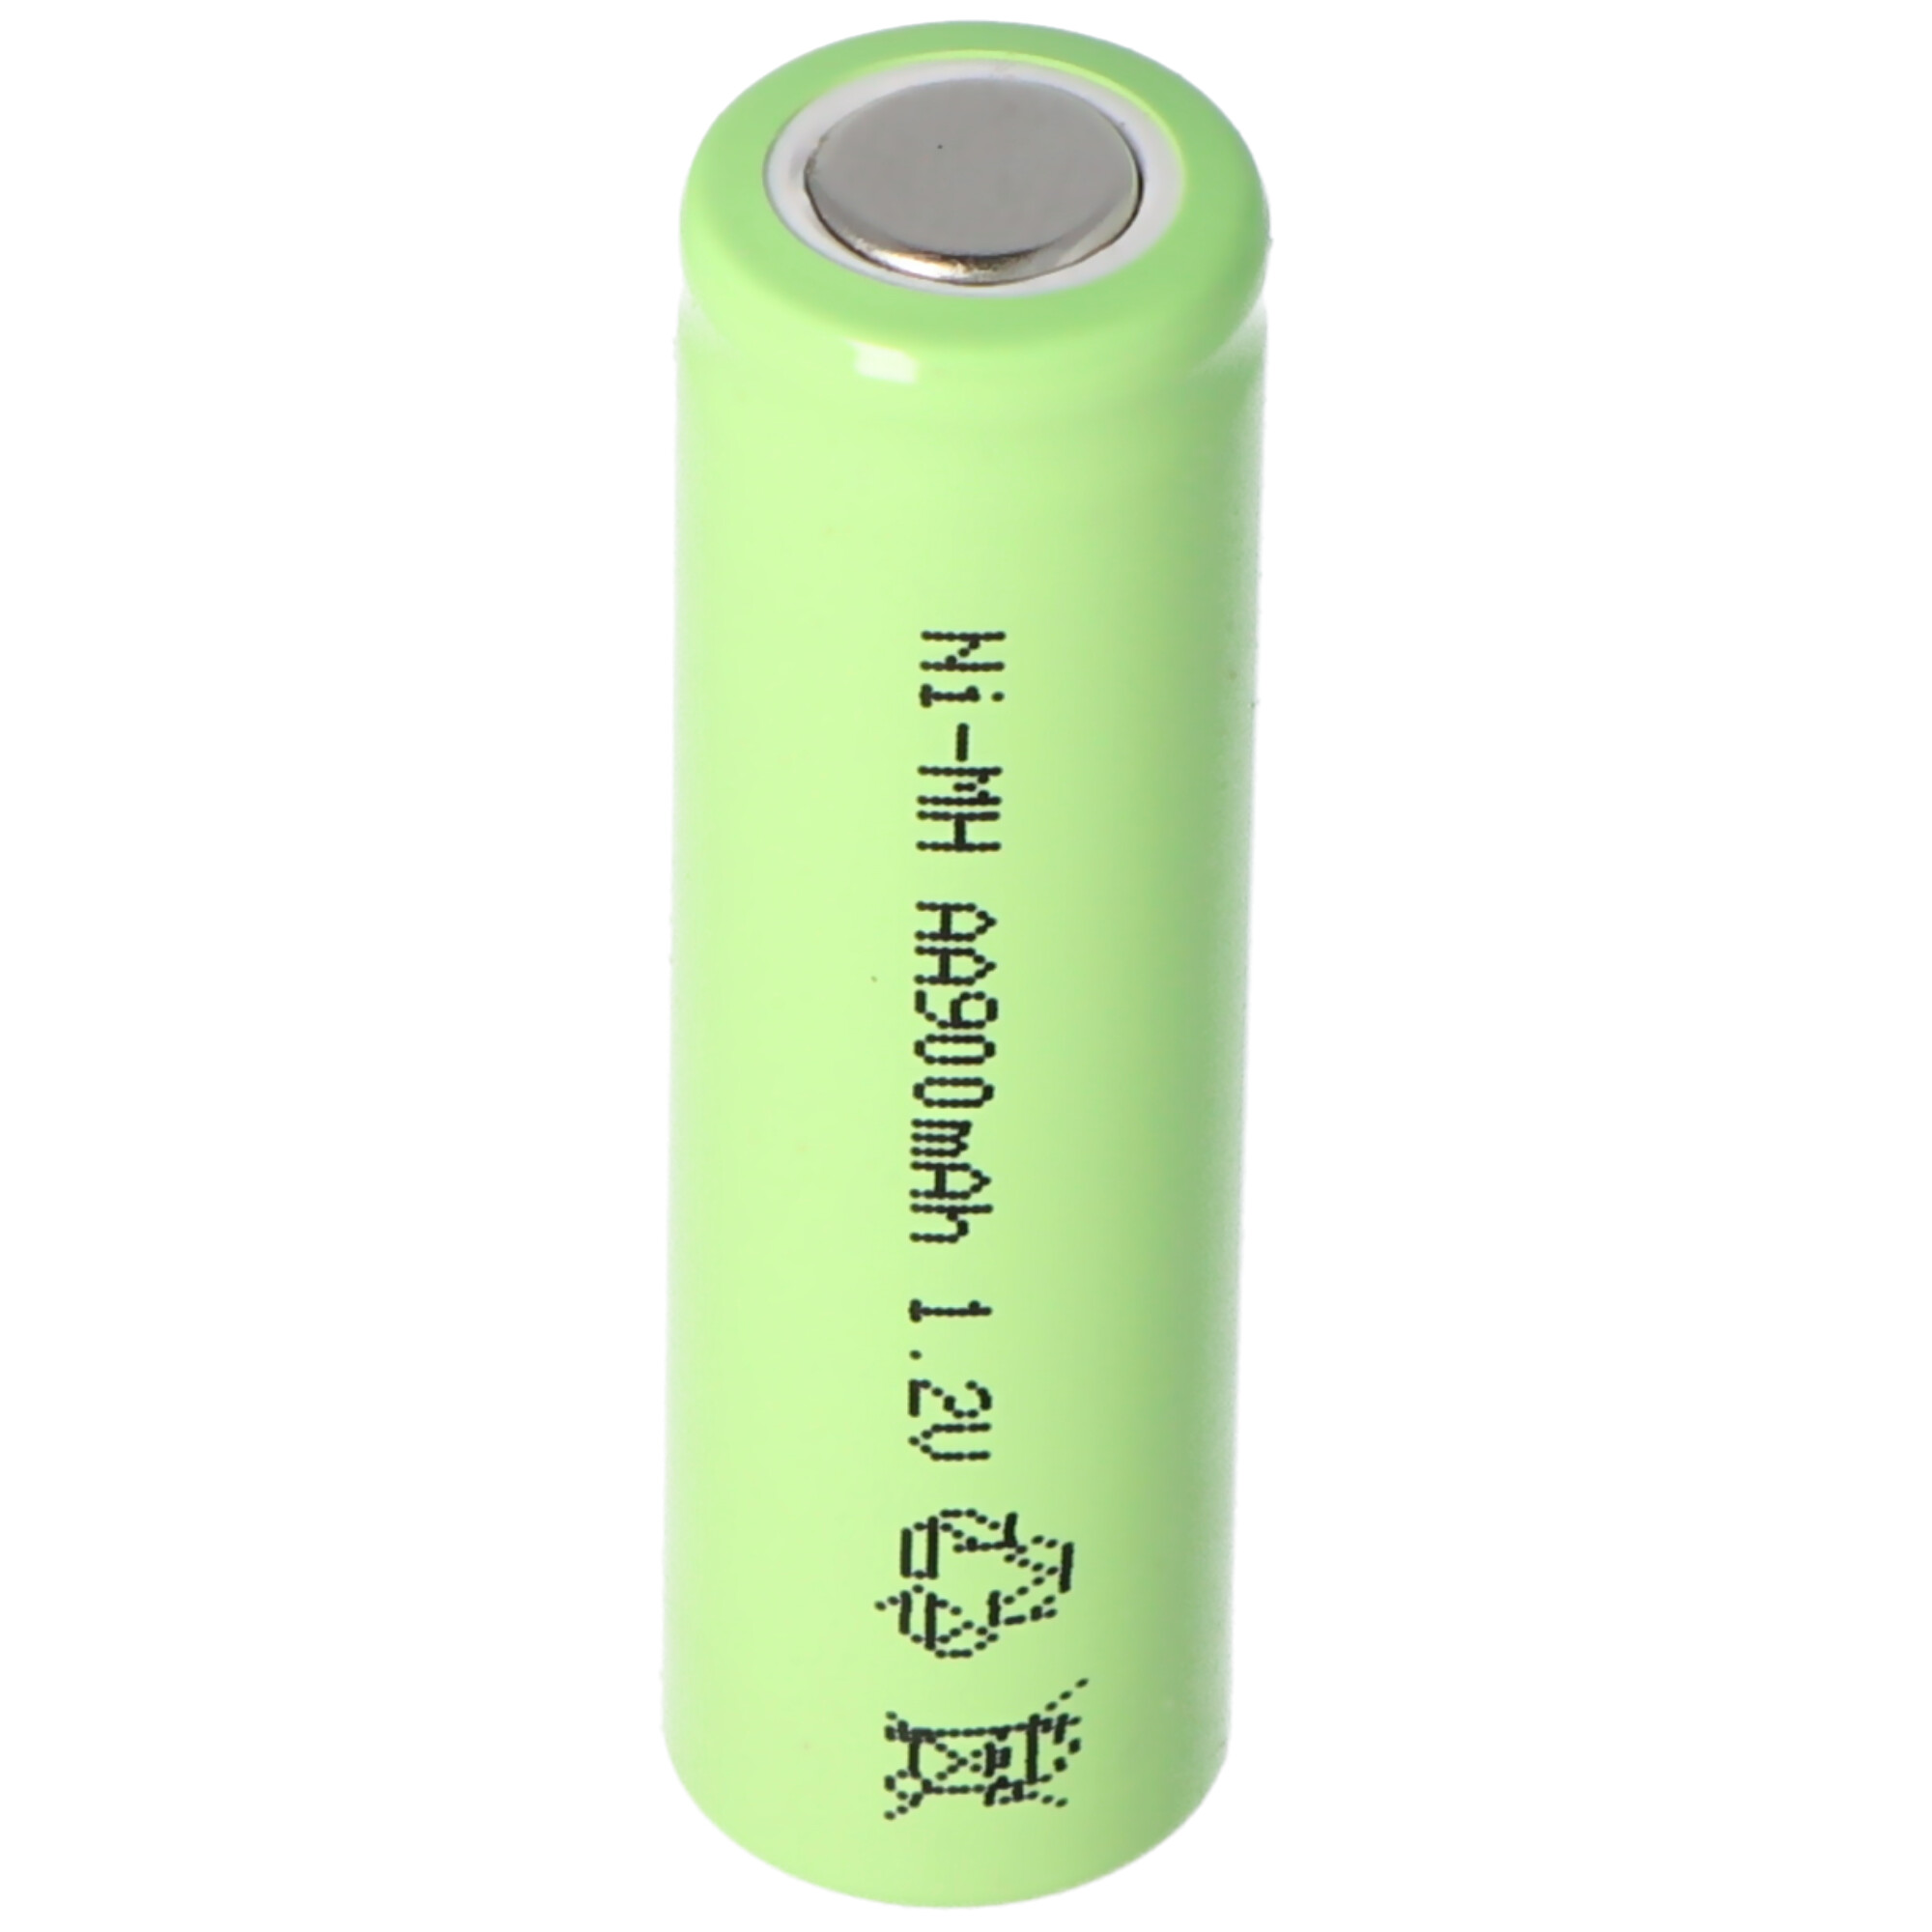 BONAI Akku AA 1100mAh Wiederaufladbare Batterien Geringe Kapazität 1,2V AA NI-MH Aufladbare Akkubatterien geringe Selbstentladung 8 Stück 